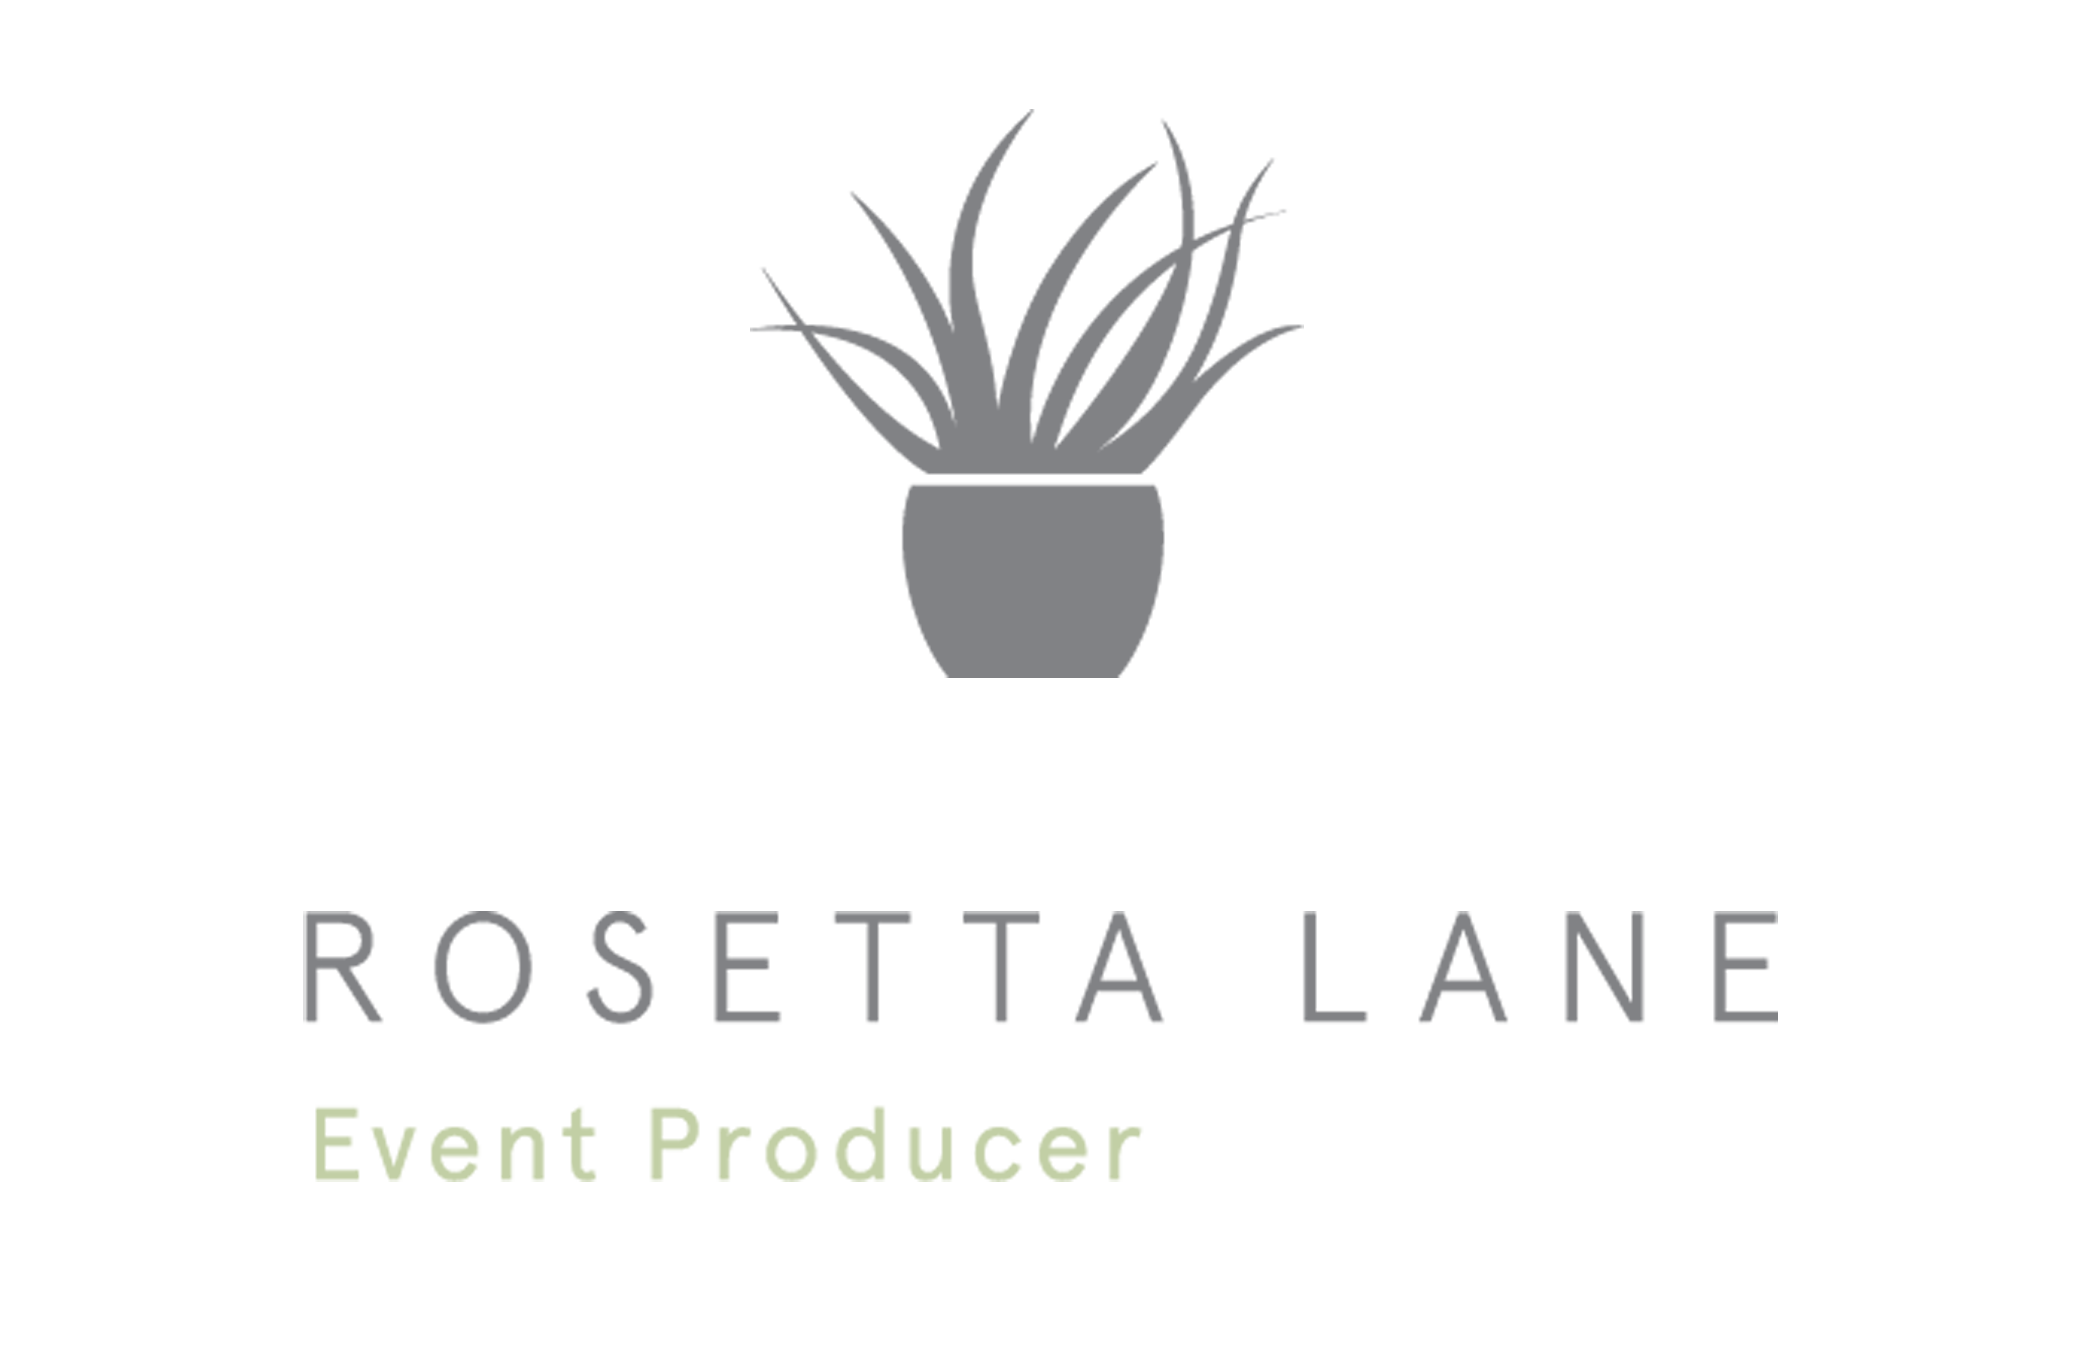 Rosetta Lane